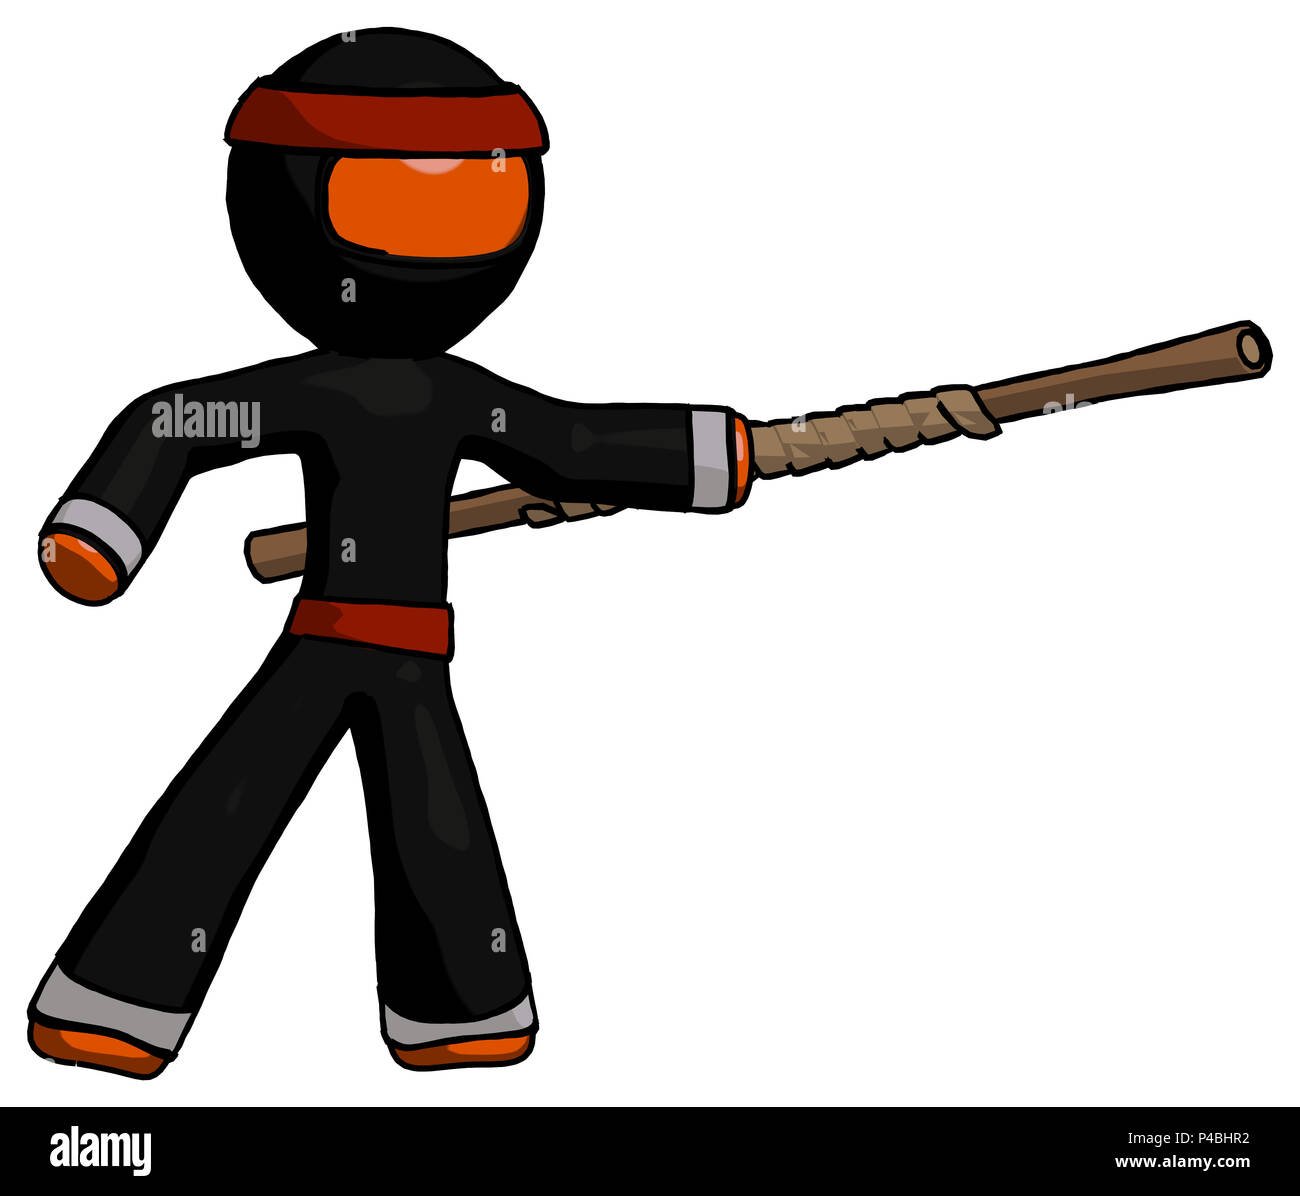 Orange ninja warrior man bo staff pointing right kung fu pose. Stock Photo